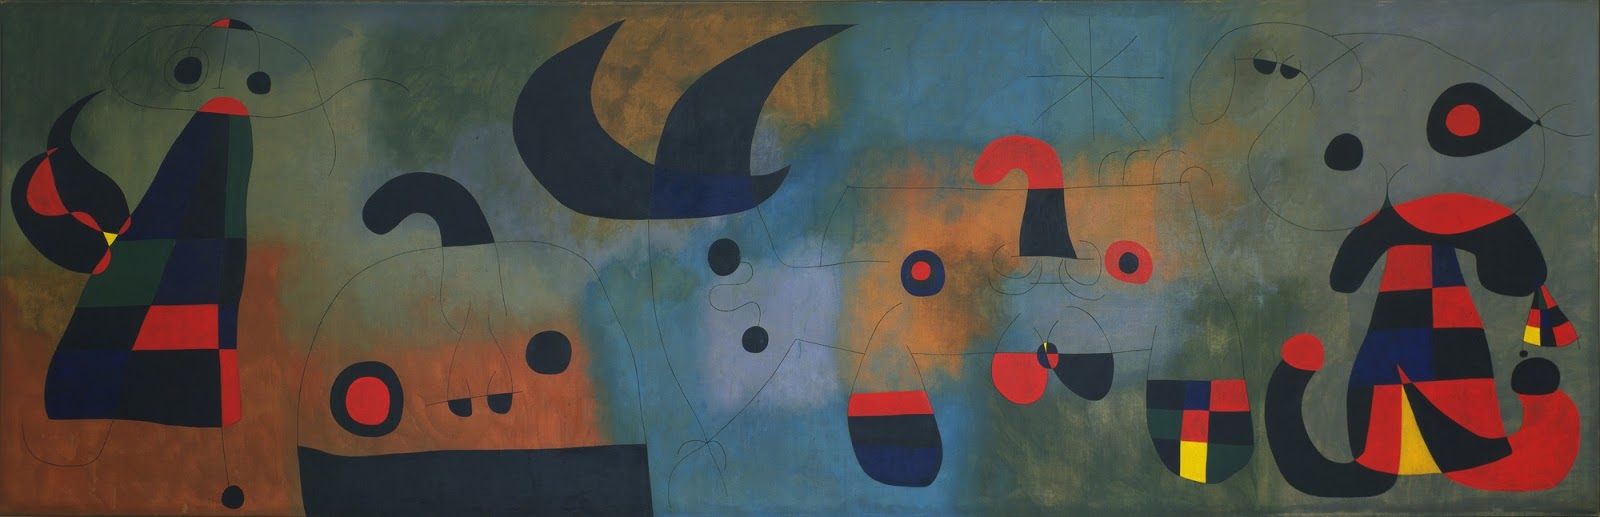 Joan+Miro-1893-1983 (24).jpg